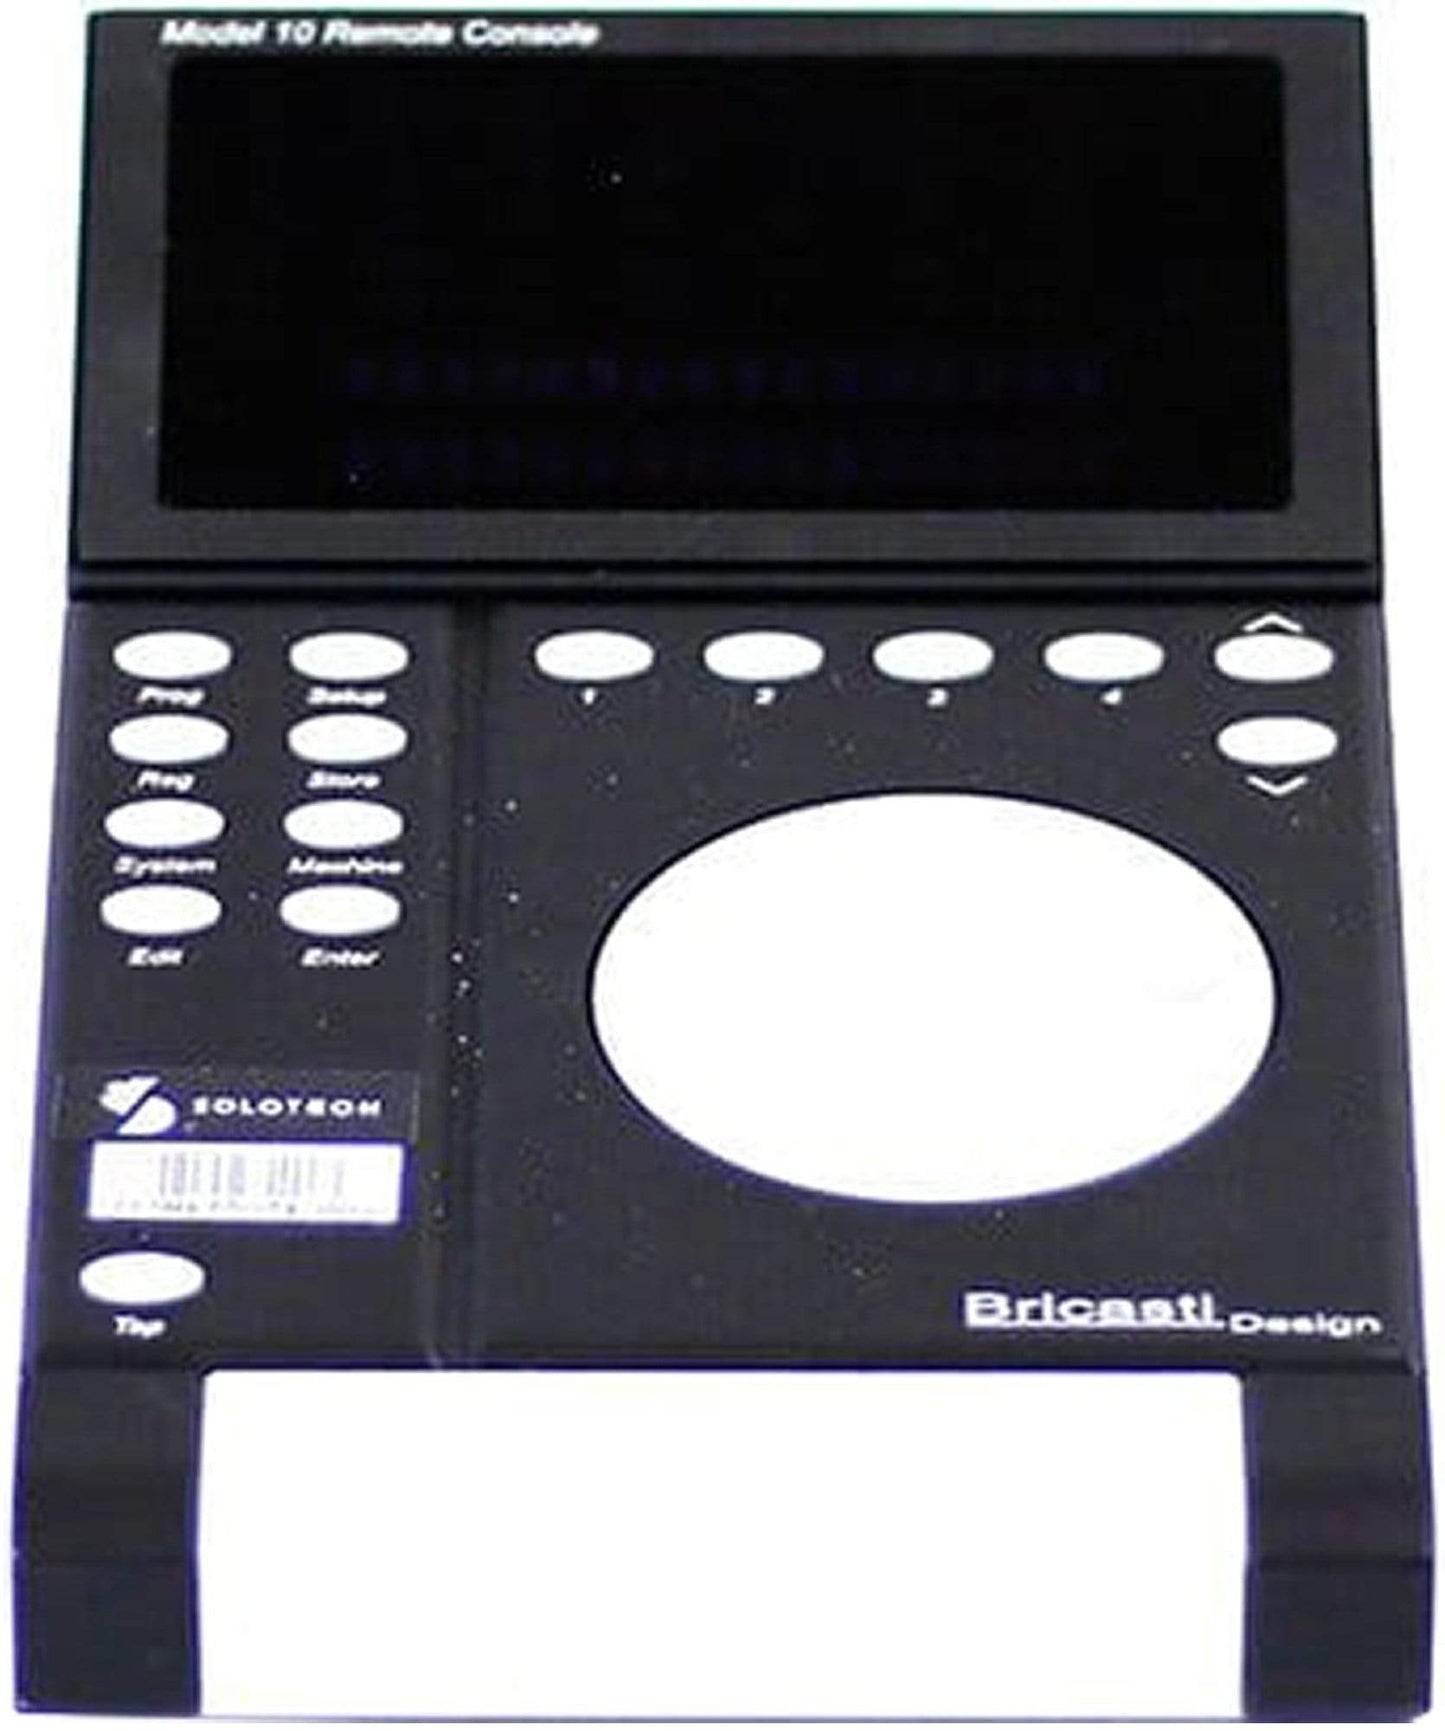 Bricasti M10 Remote for Mainframe Reverb Processor - ProSound and Stage Lighting